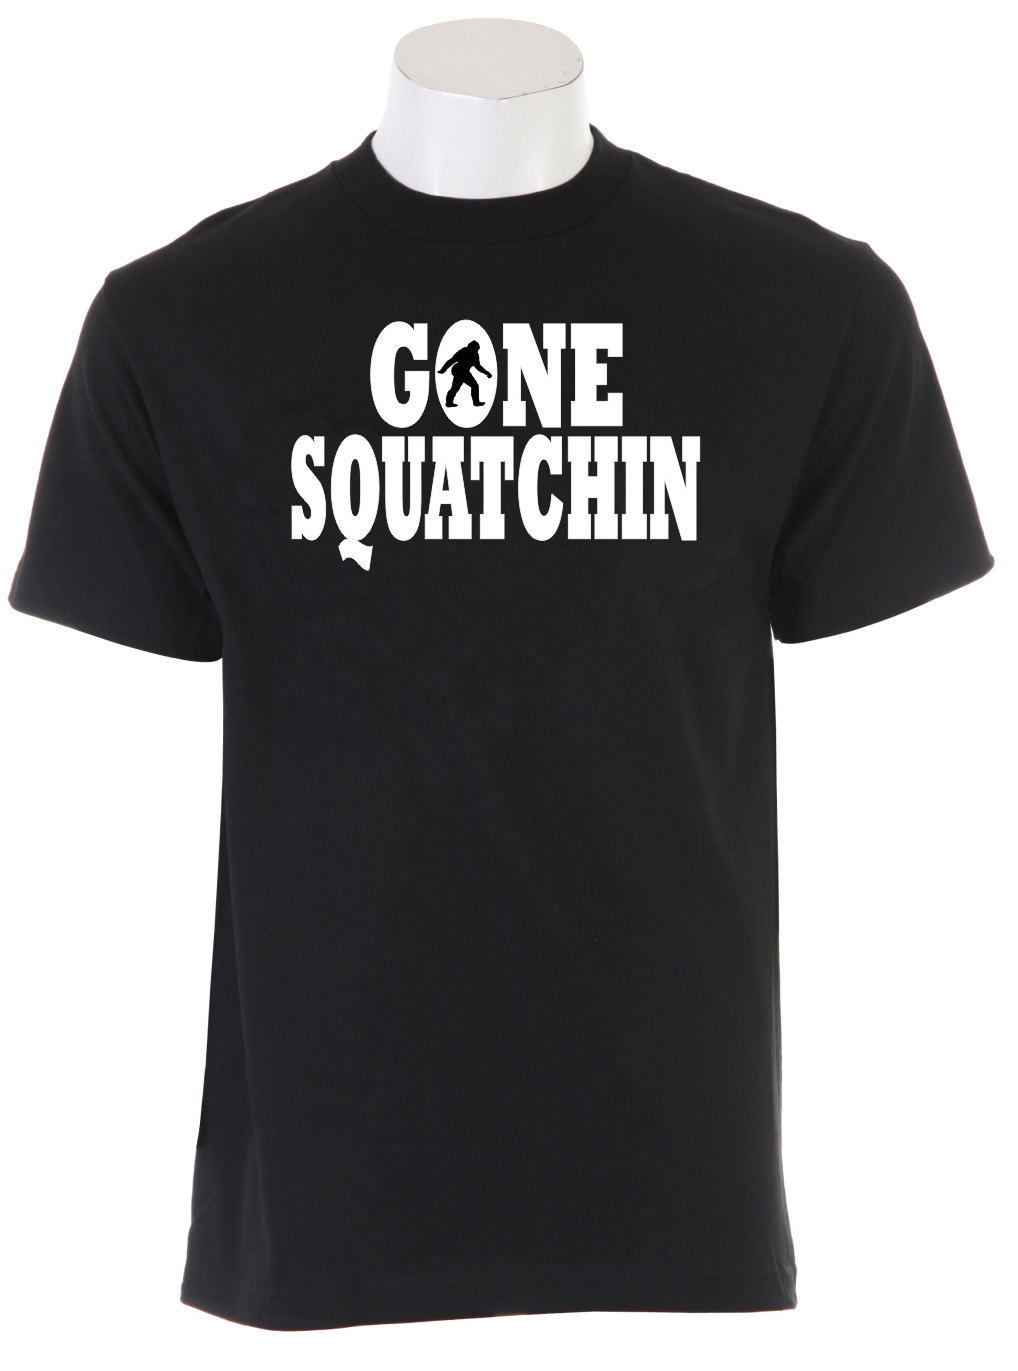 Gone Squatchin T-Shirt - funny sasquatch designed shirt